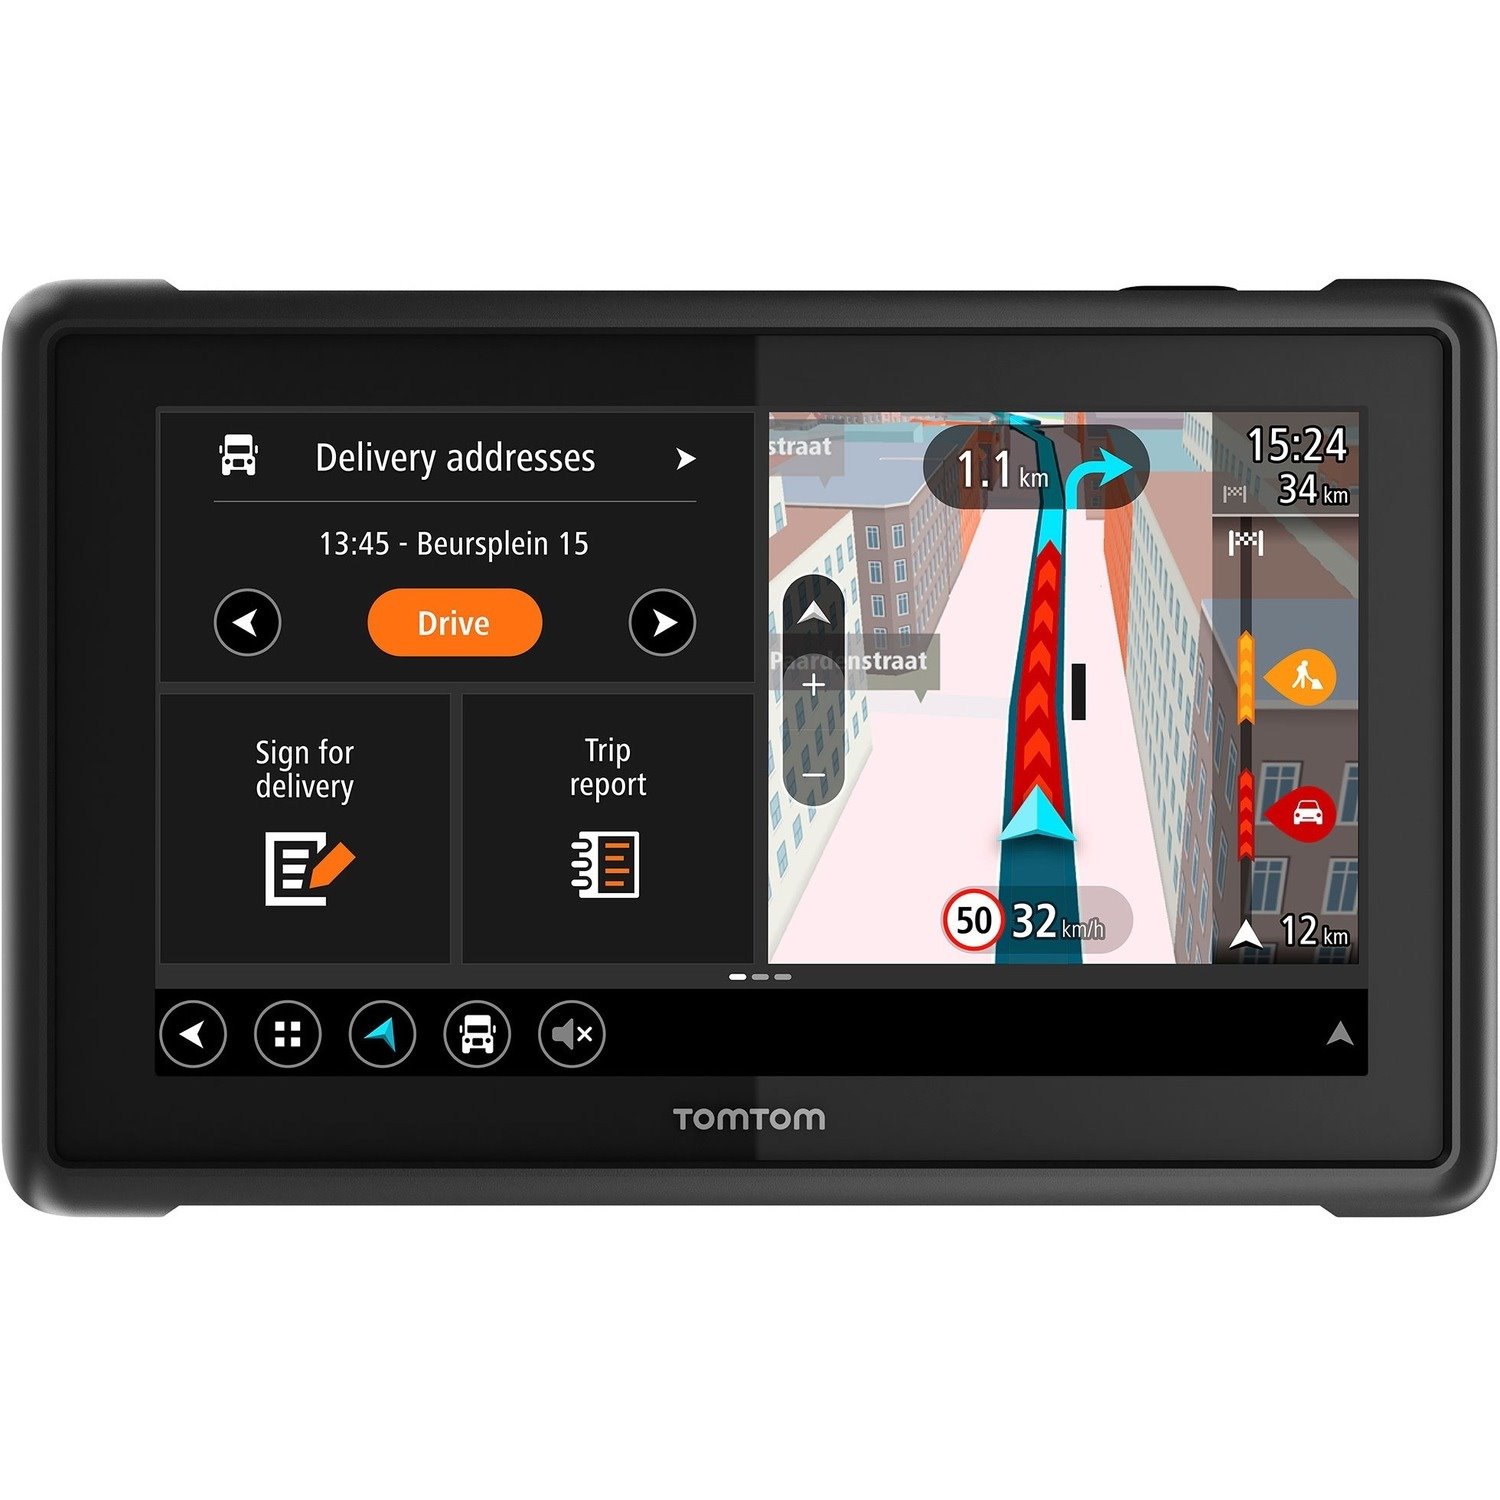 Tomtom Bridge Automobile Portable GPS Navigator - Mountable, Portable